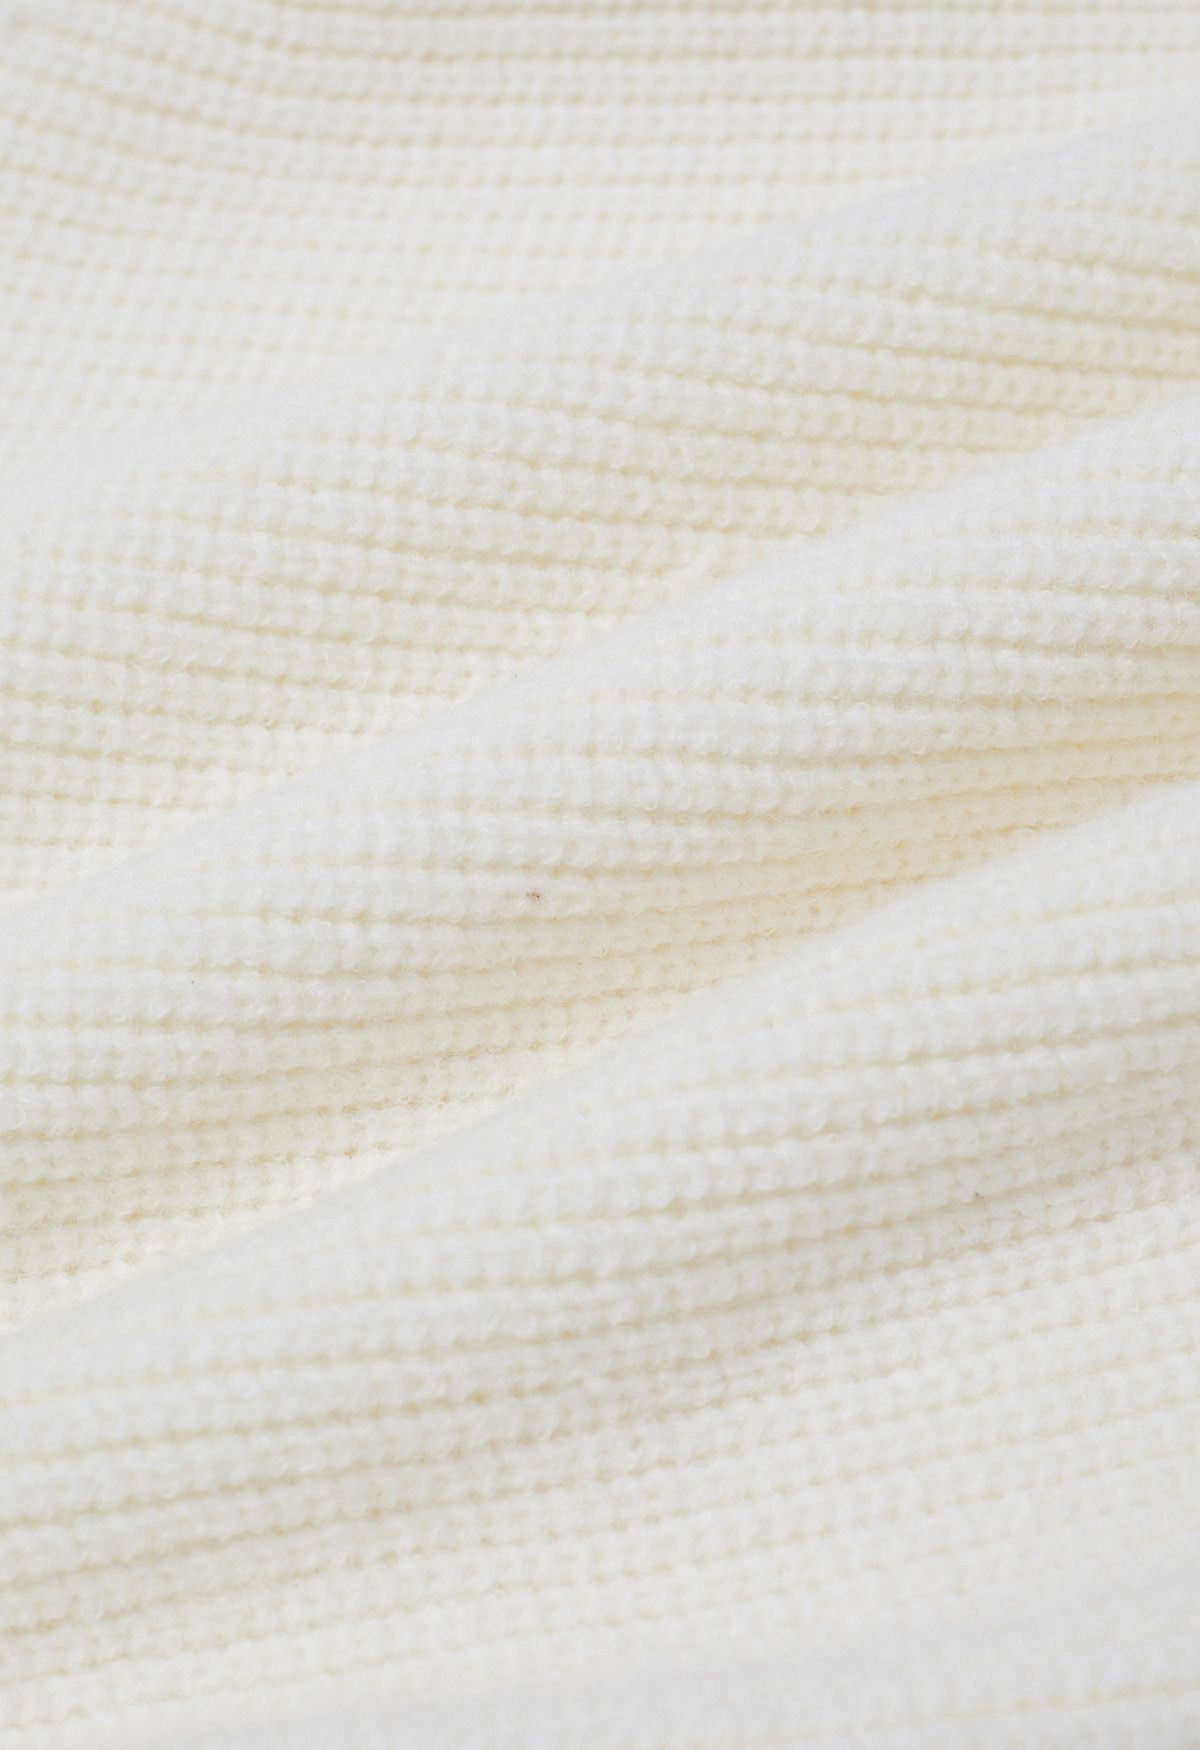 Mock Neck Short Sleeve Knit Sweater in White